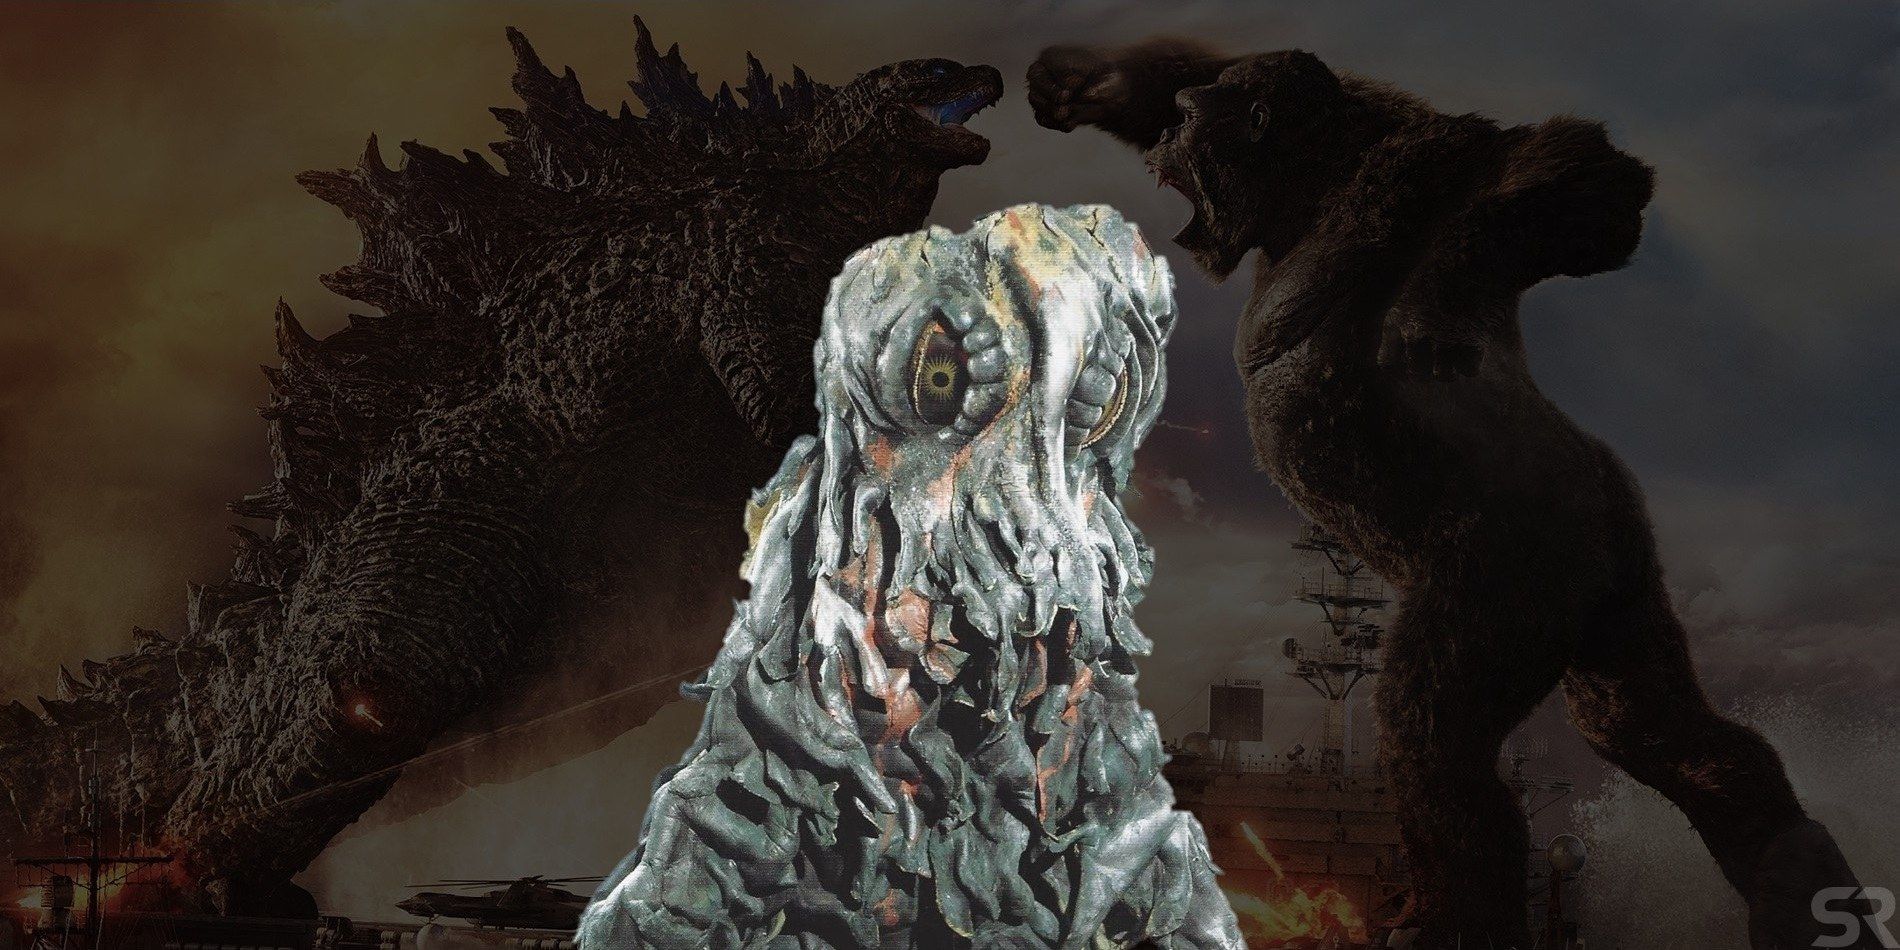 Godzilla vs. Kong director Adam Wingard reveals Godzilla vs. the Smog Monster is one of favorite Showa-era Godzilla movies